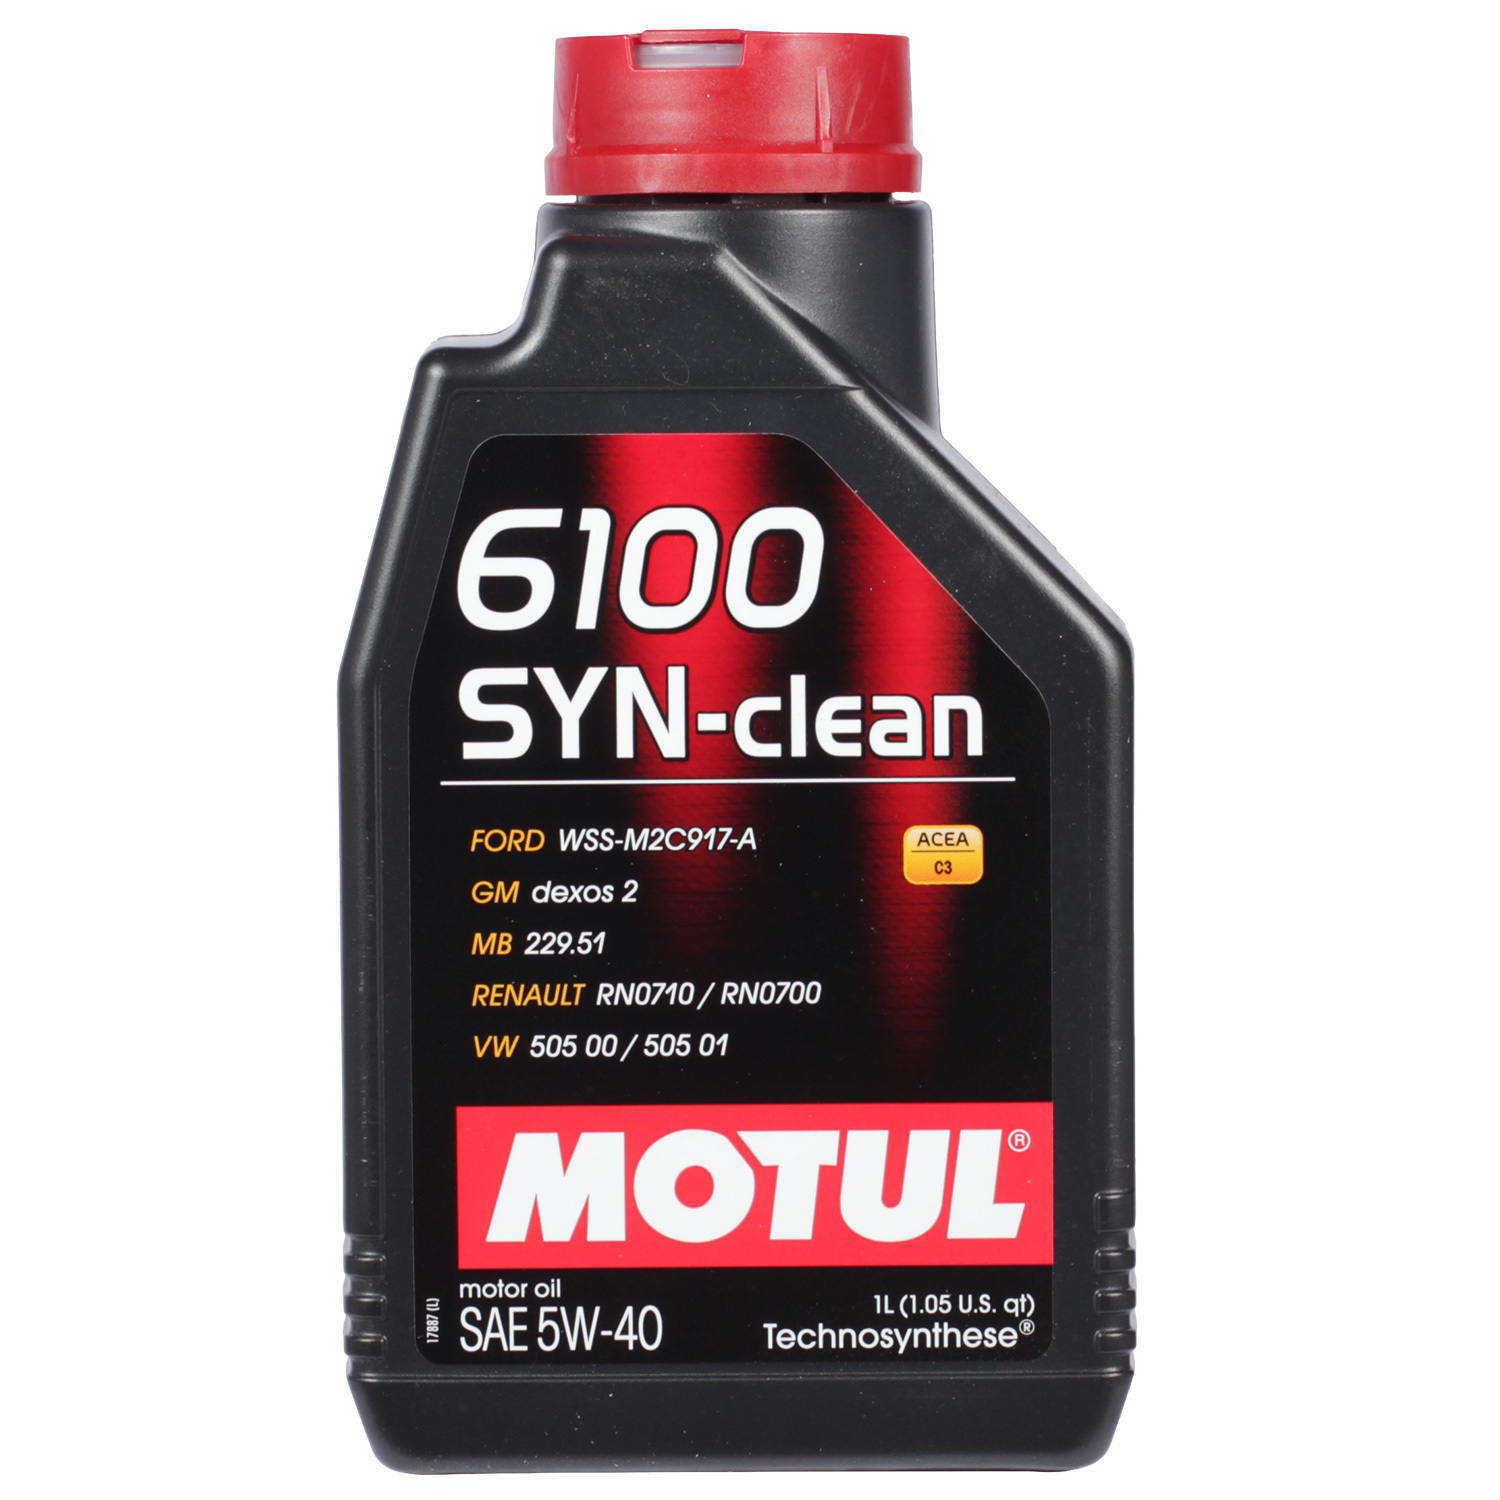 Motul Моторное масло Motul 6100 SYN-CLEAN 5W-40, 1 л масло моторное motul 300v competition 5w 40 синтетическое 2 л